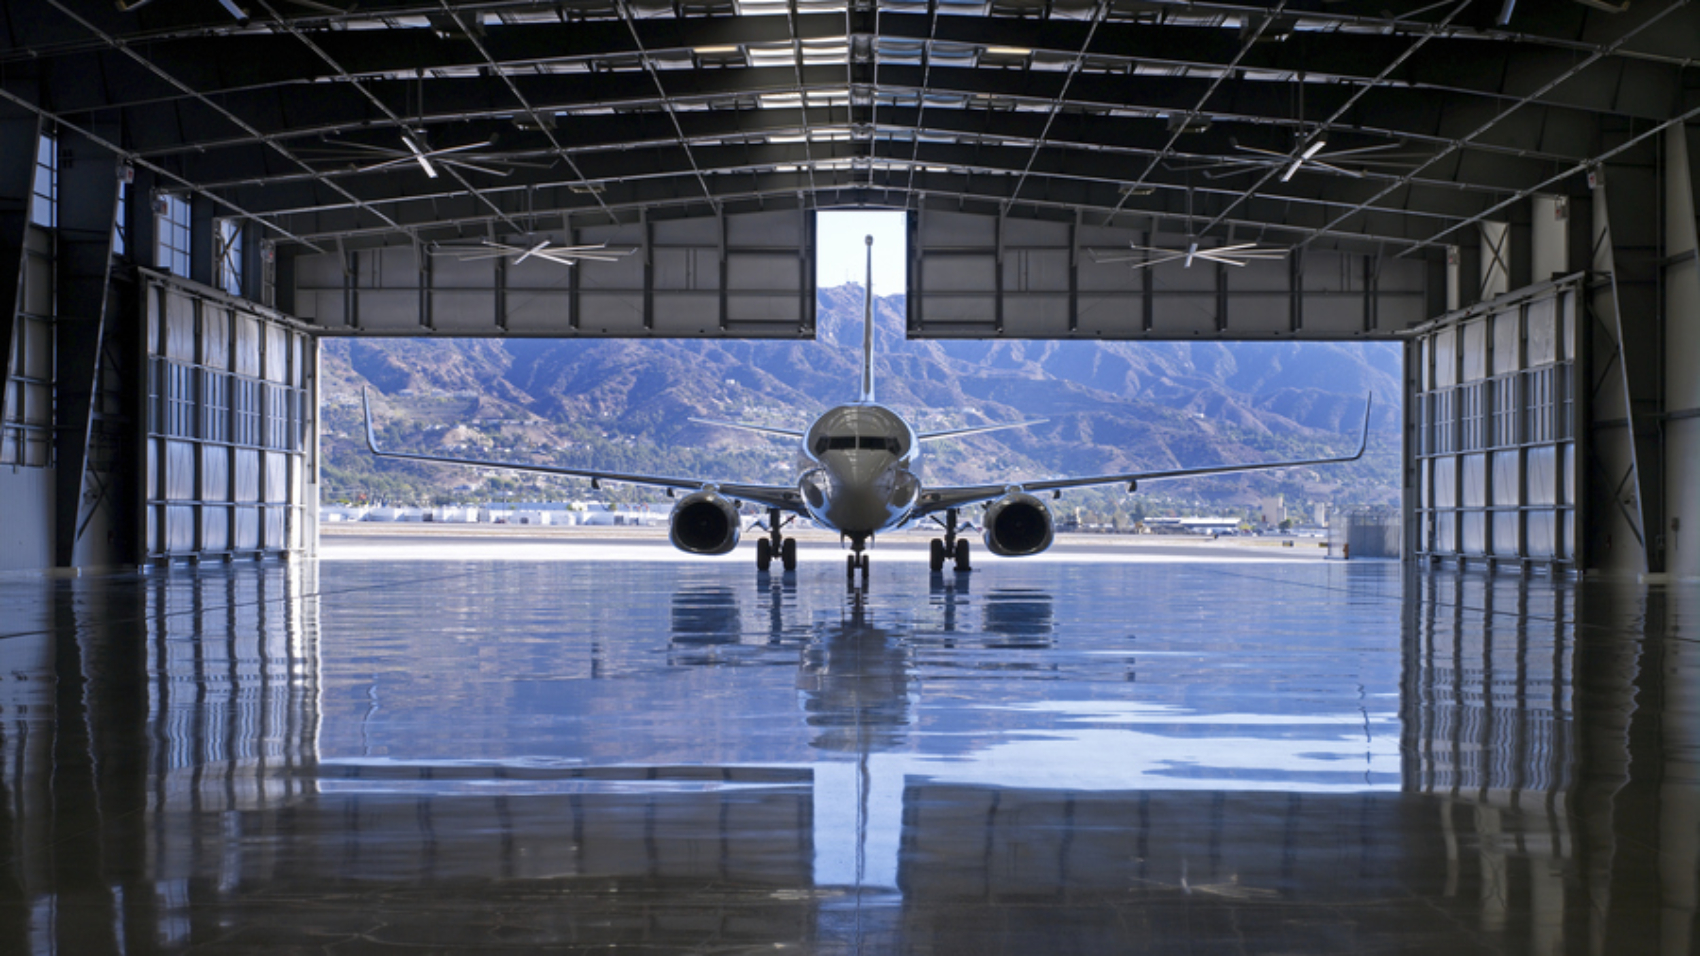 Airplane Hangar and Jet